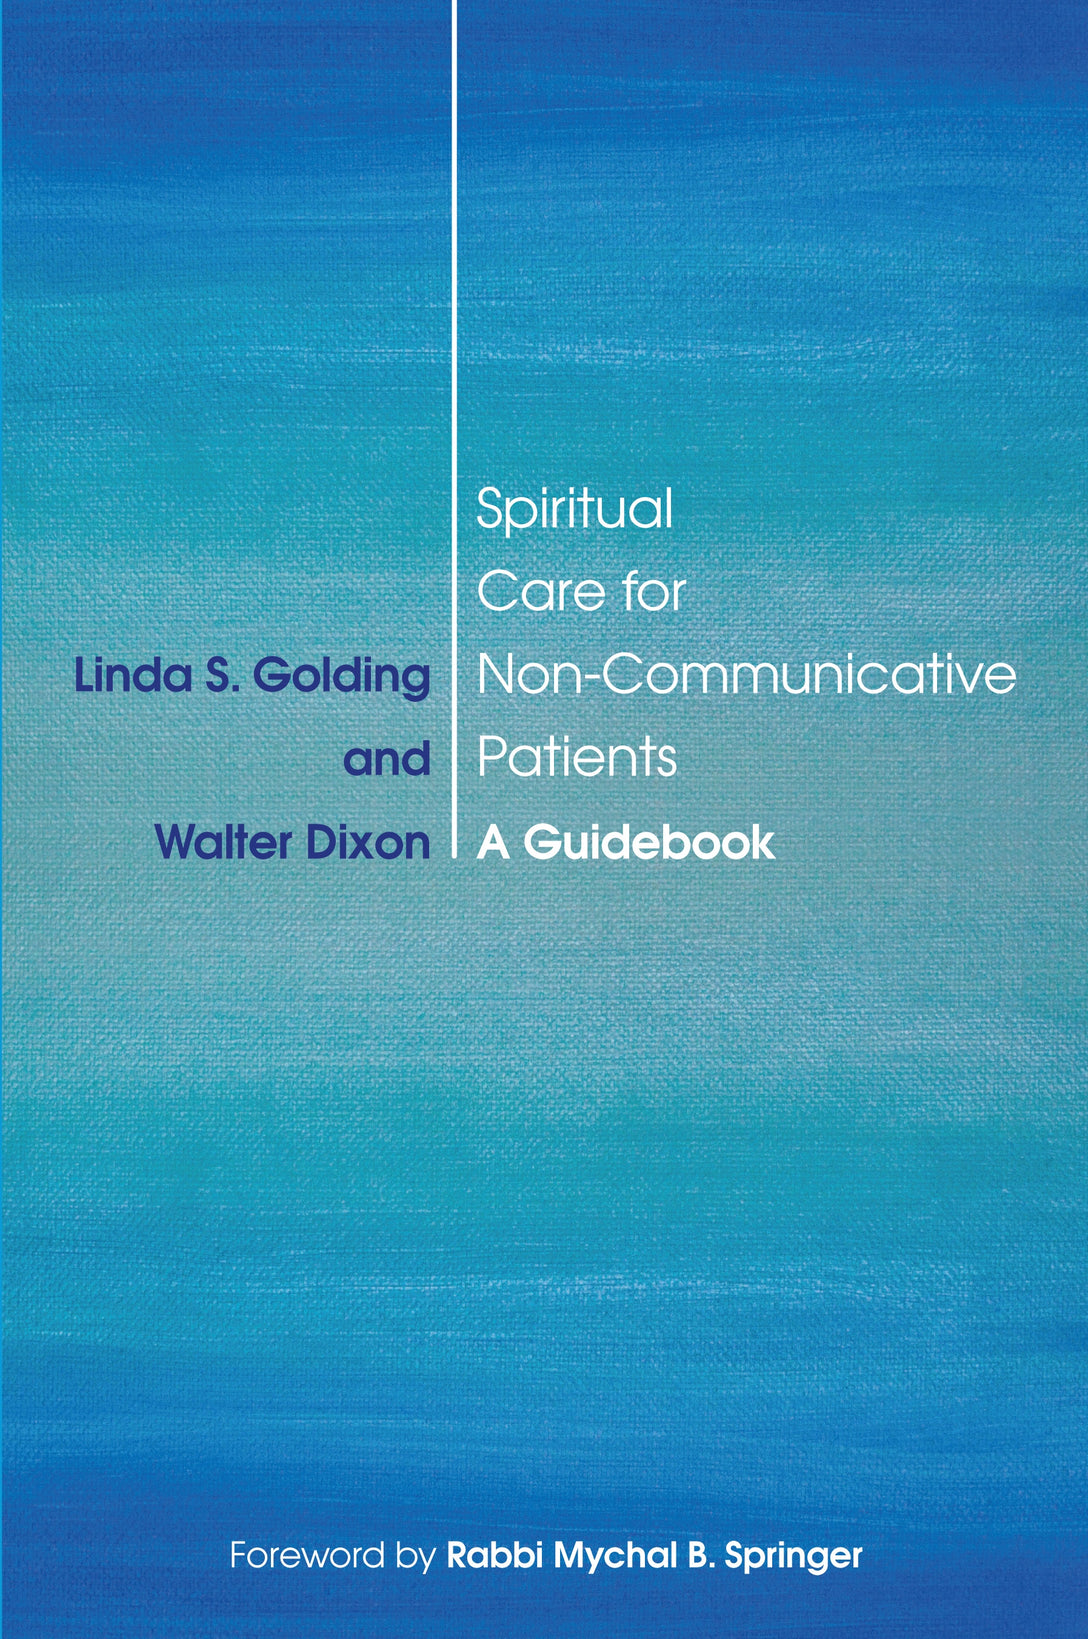 Spiritual Care for Non-Communicative Patients by Walter Dixon, Linda S. Golding, Rabbi Mychal B. Springer